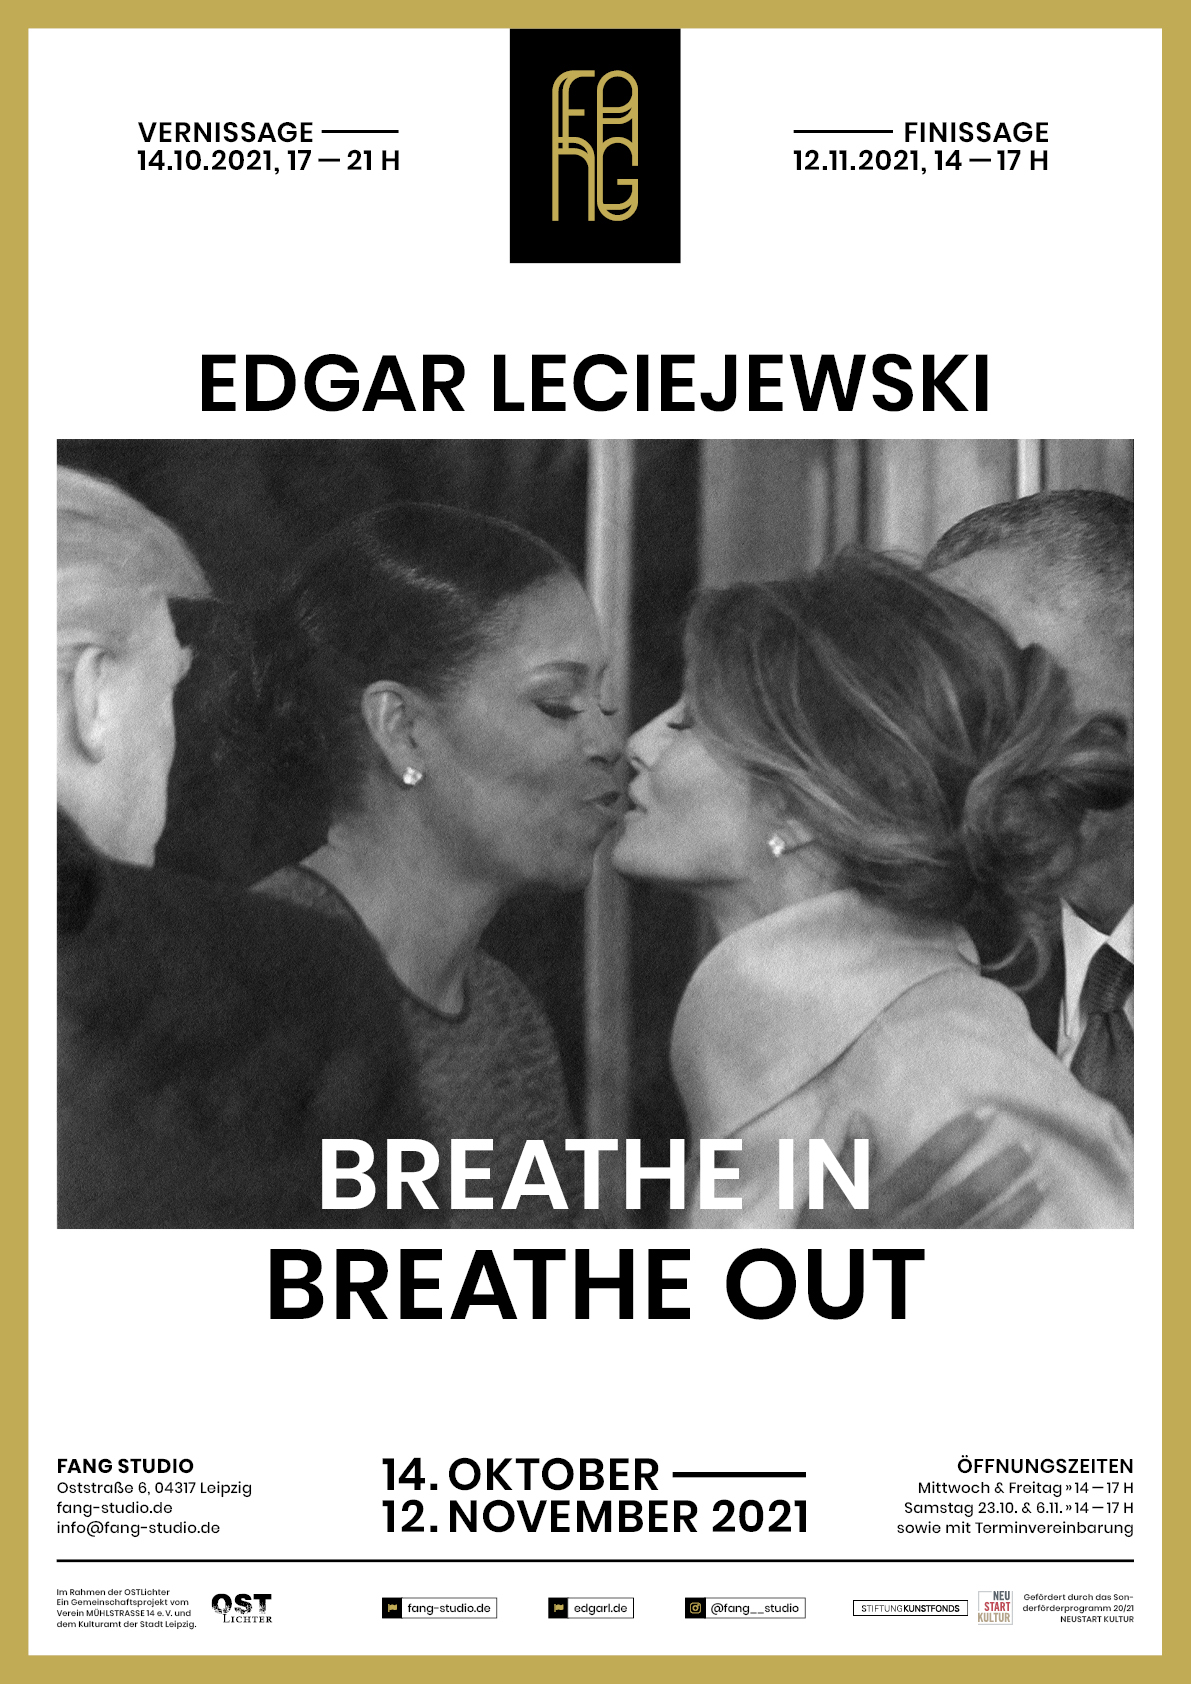 Edgar Leciejewski - breathe in / breathe out